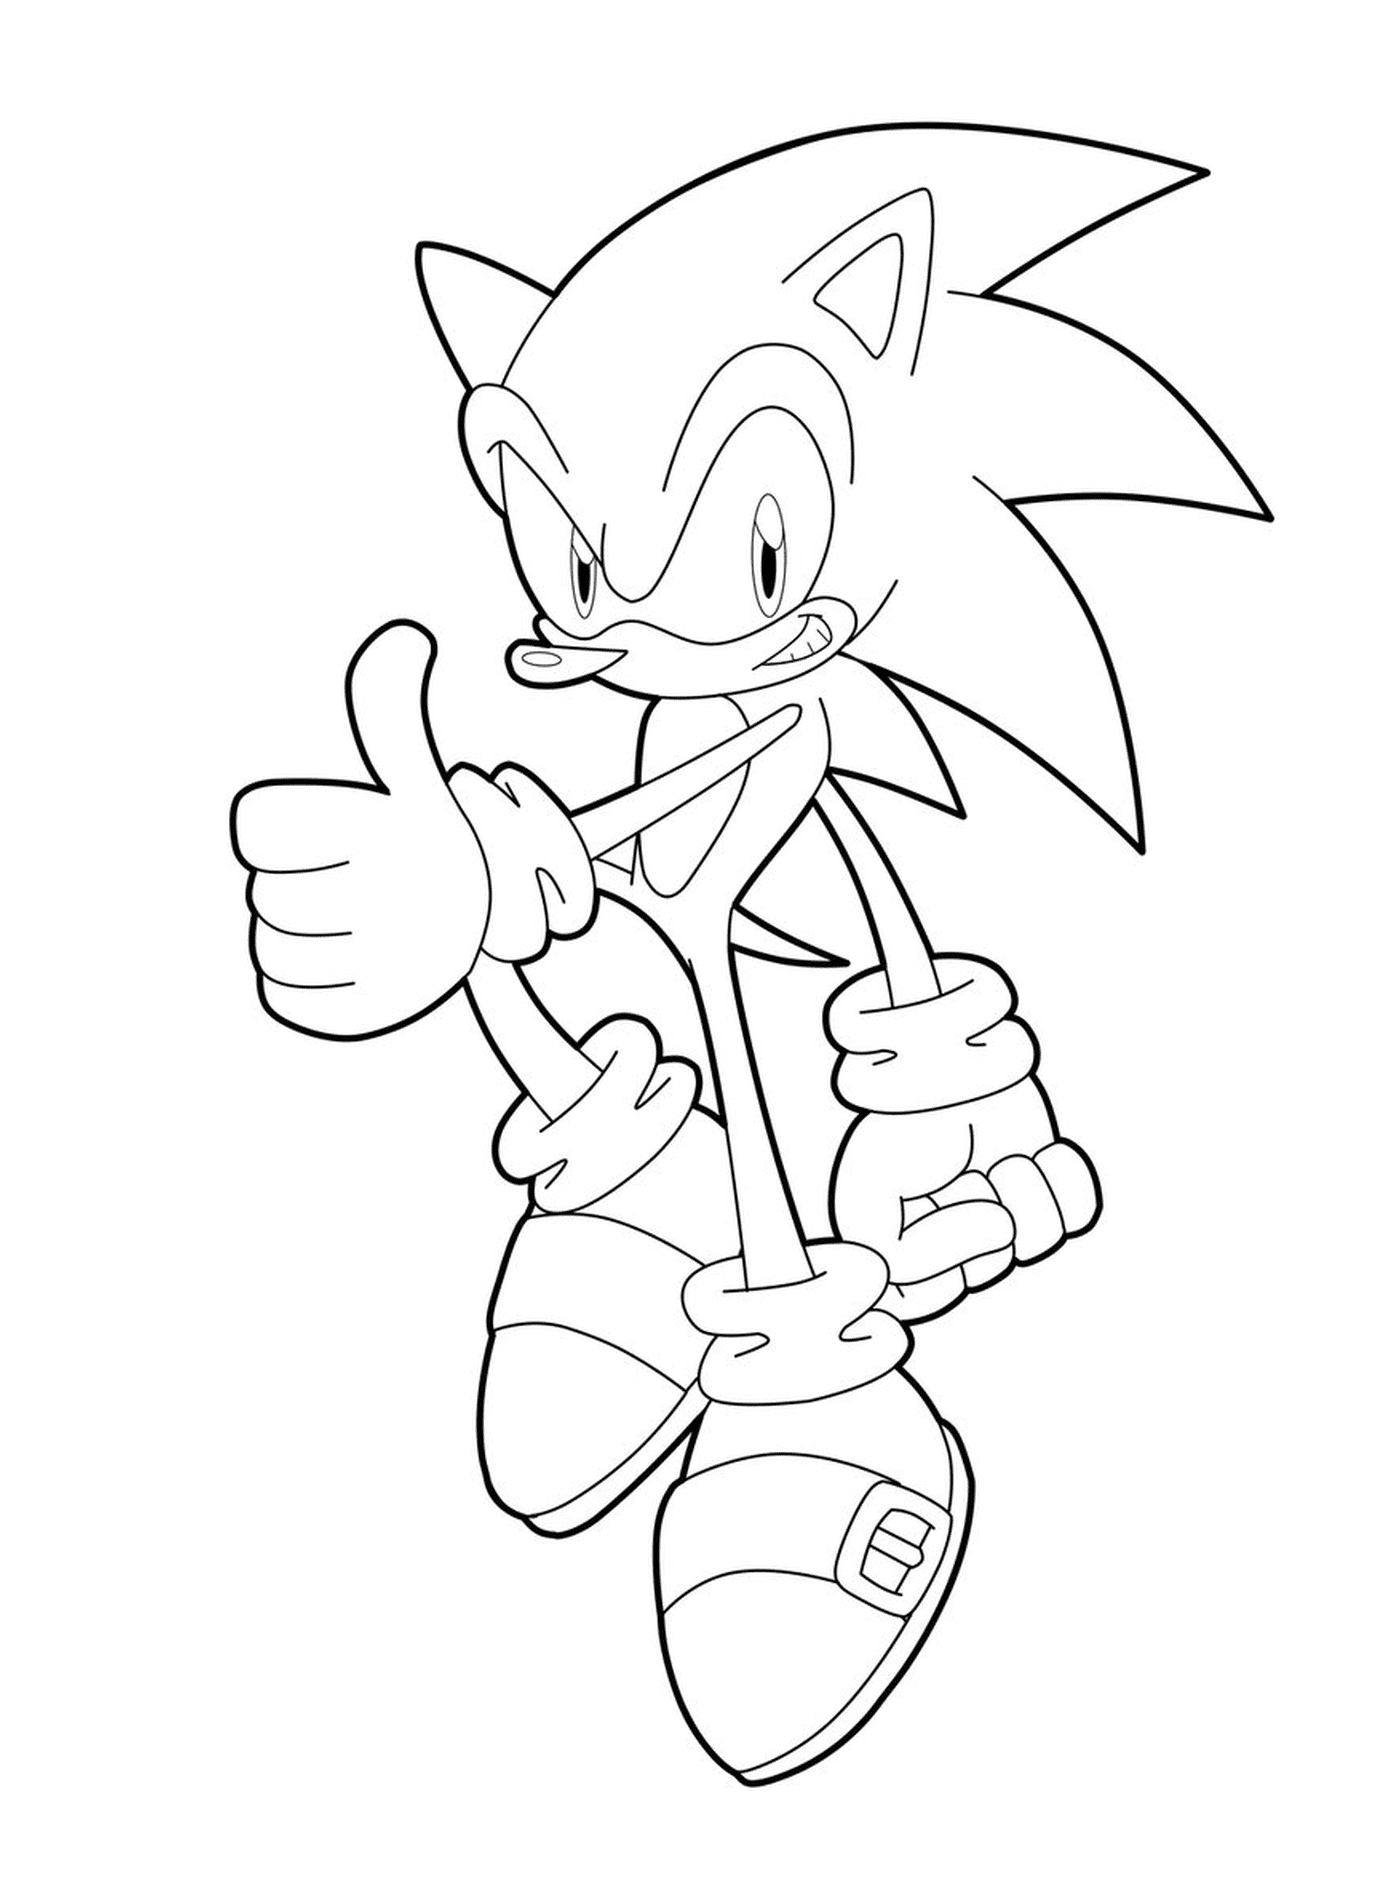  Sonic that's a raised thumb 